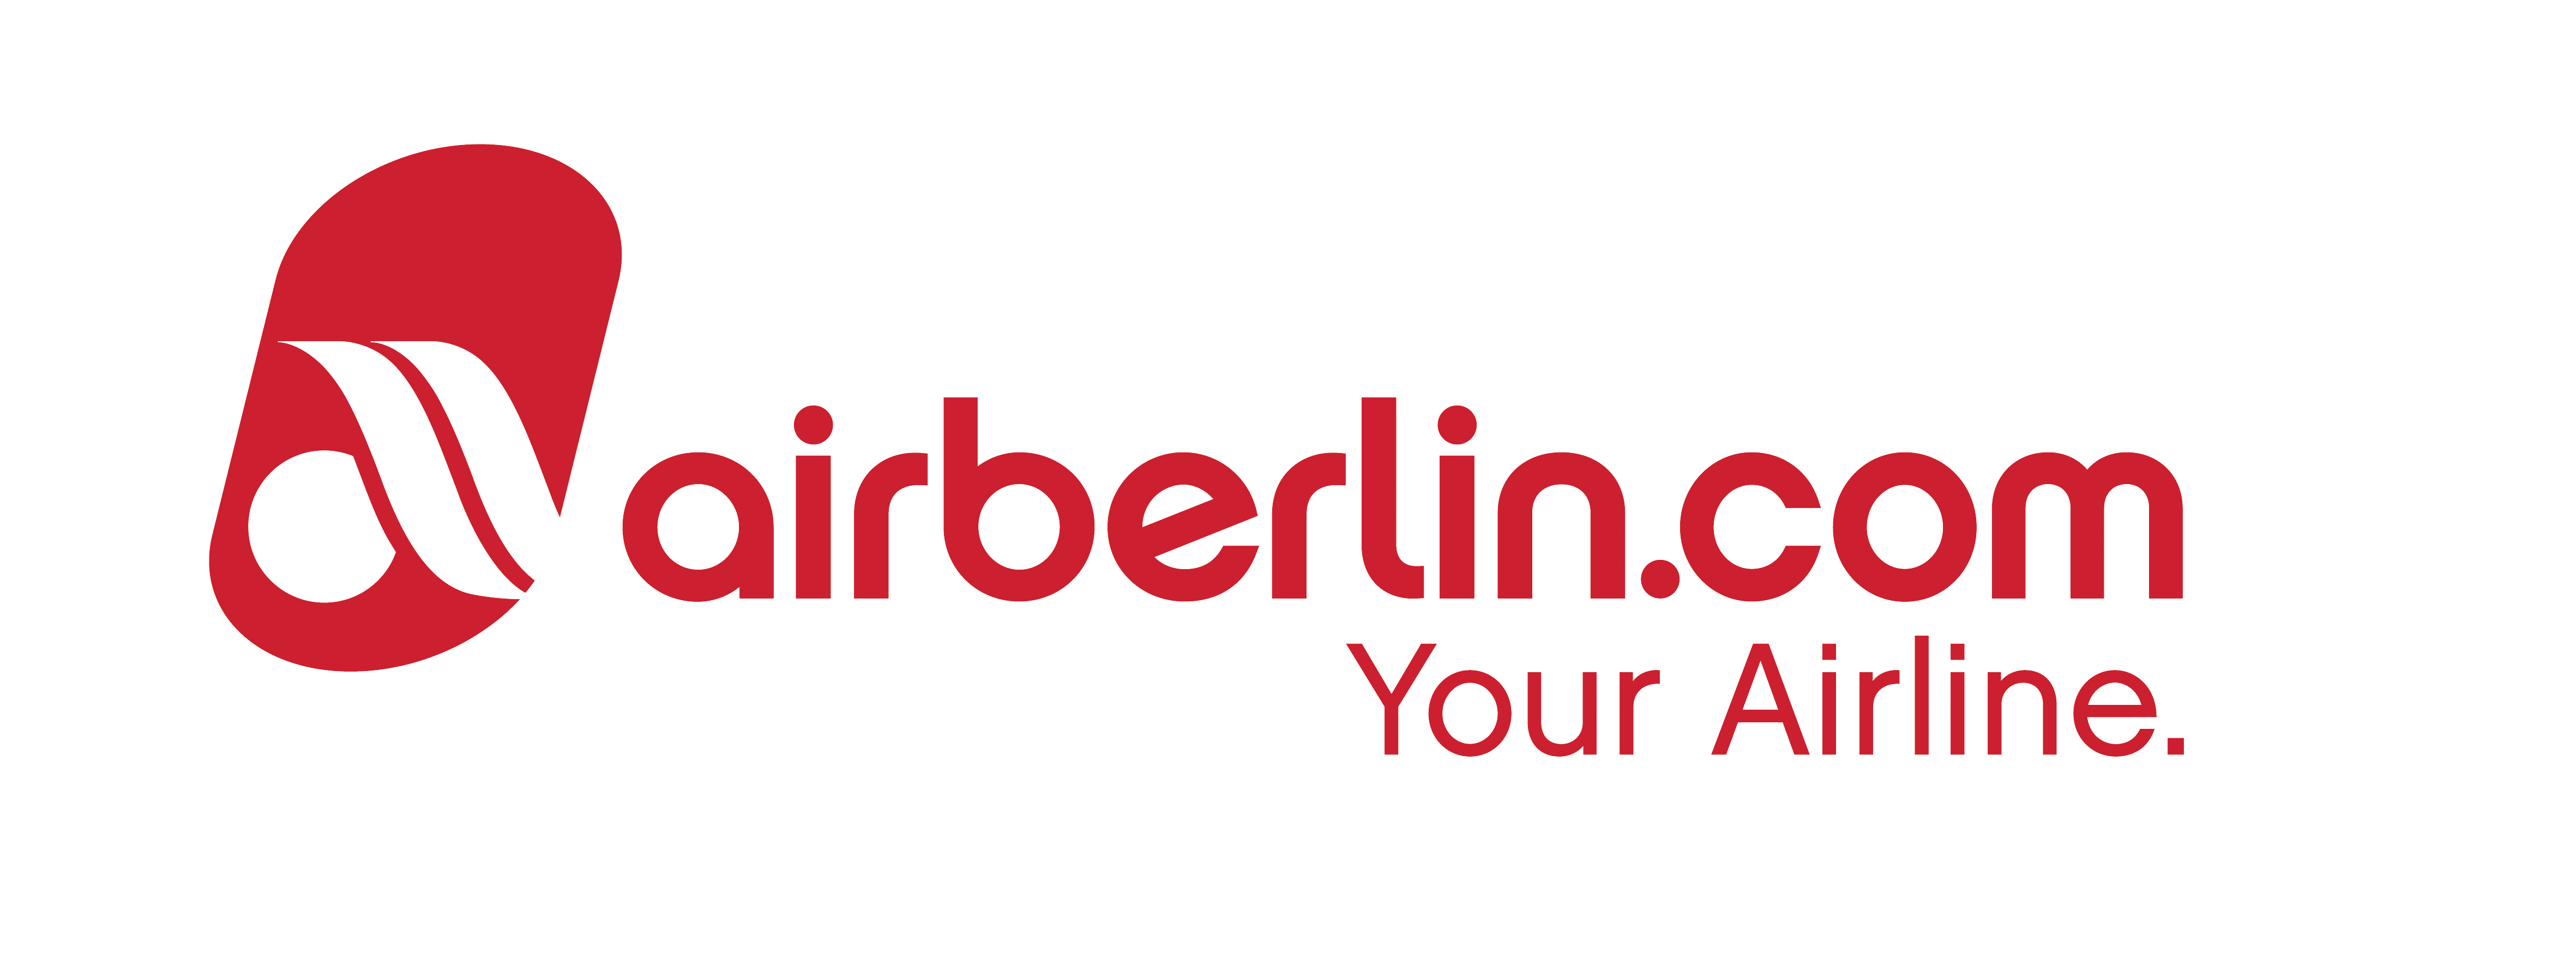 Air Berlin Logo Vector Png - Logo Airberlin Com 2009.jpg, Transparent background PNG HD thumbnail